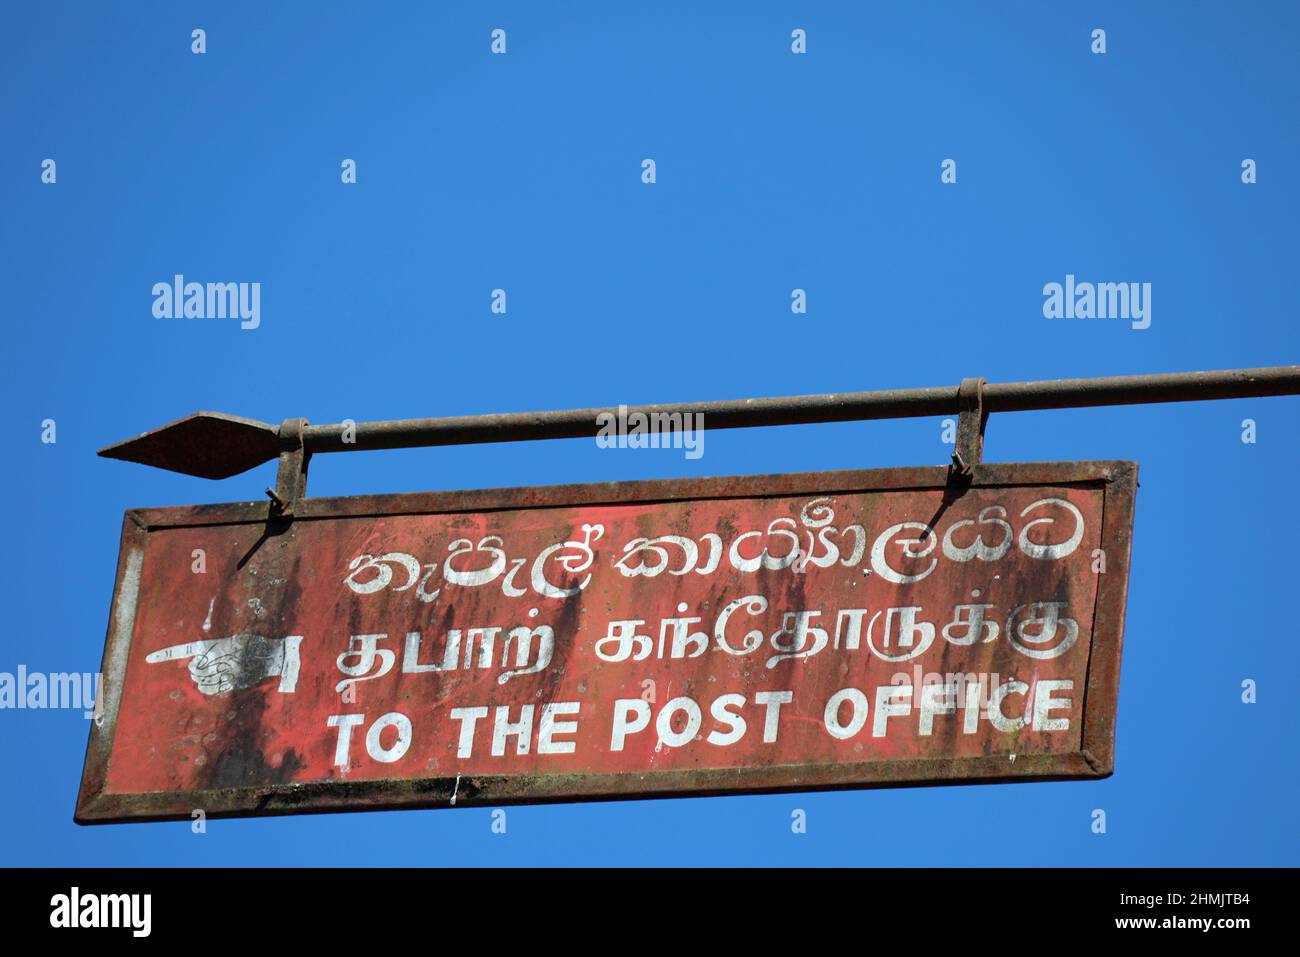 To The Post Office sign at Nuwara Eliya in Sri Lanka Stock Photo